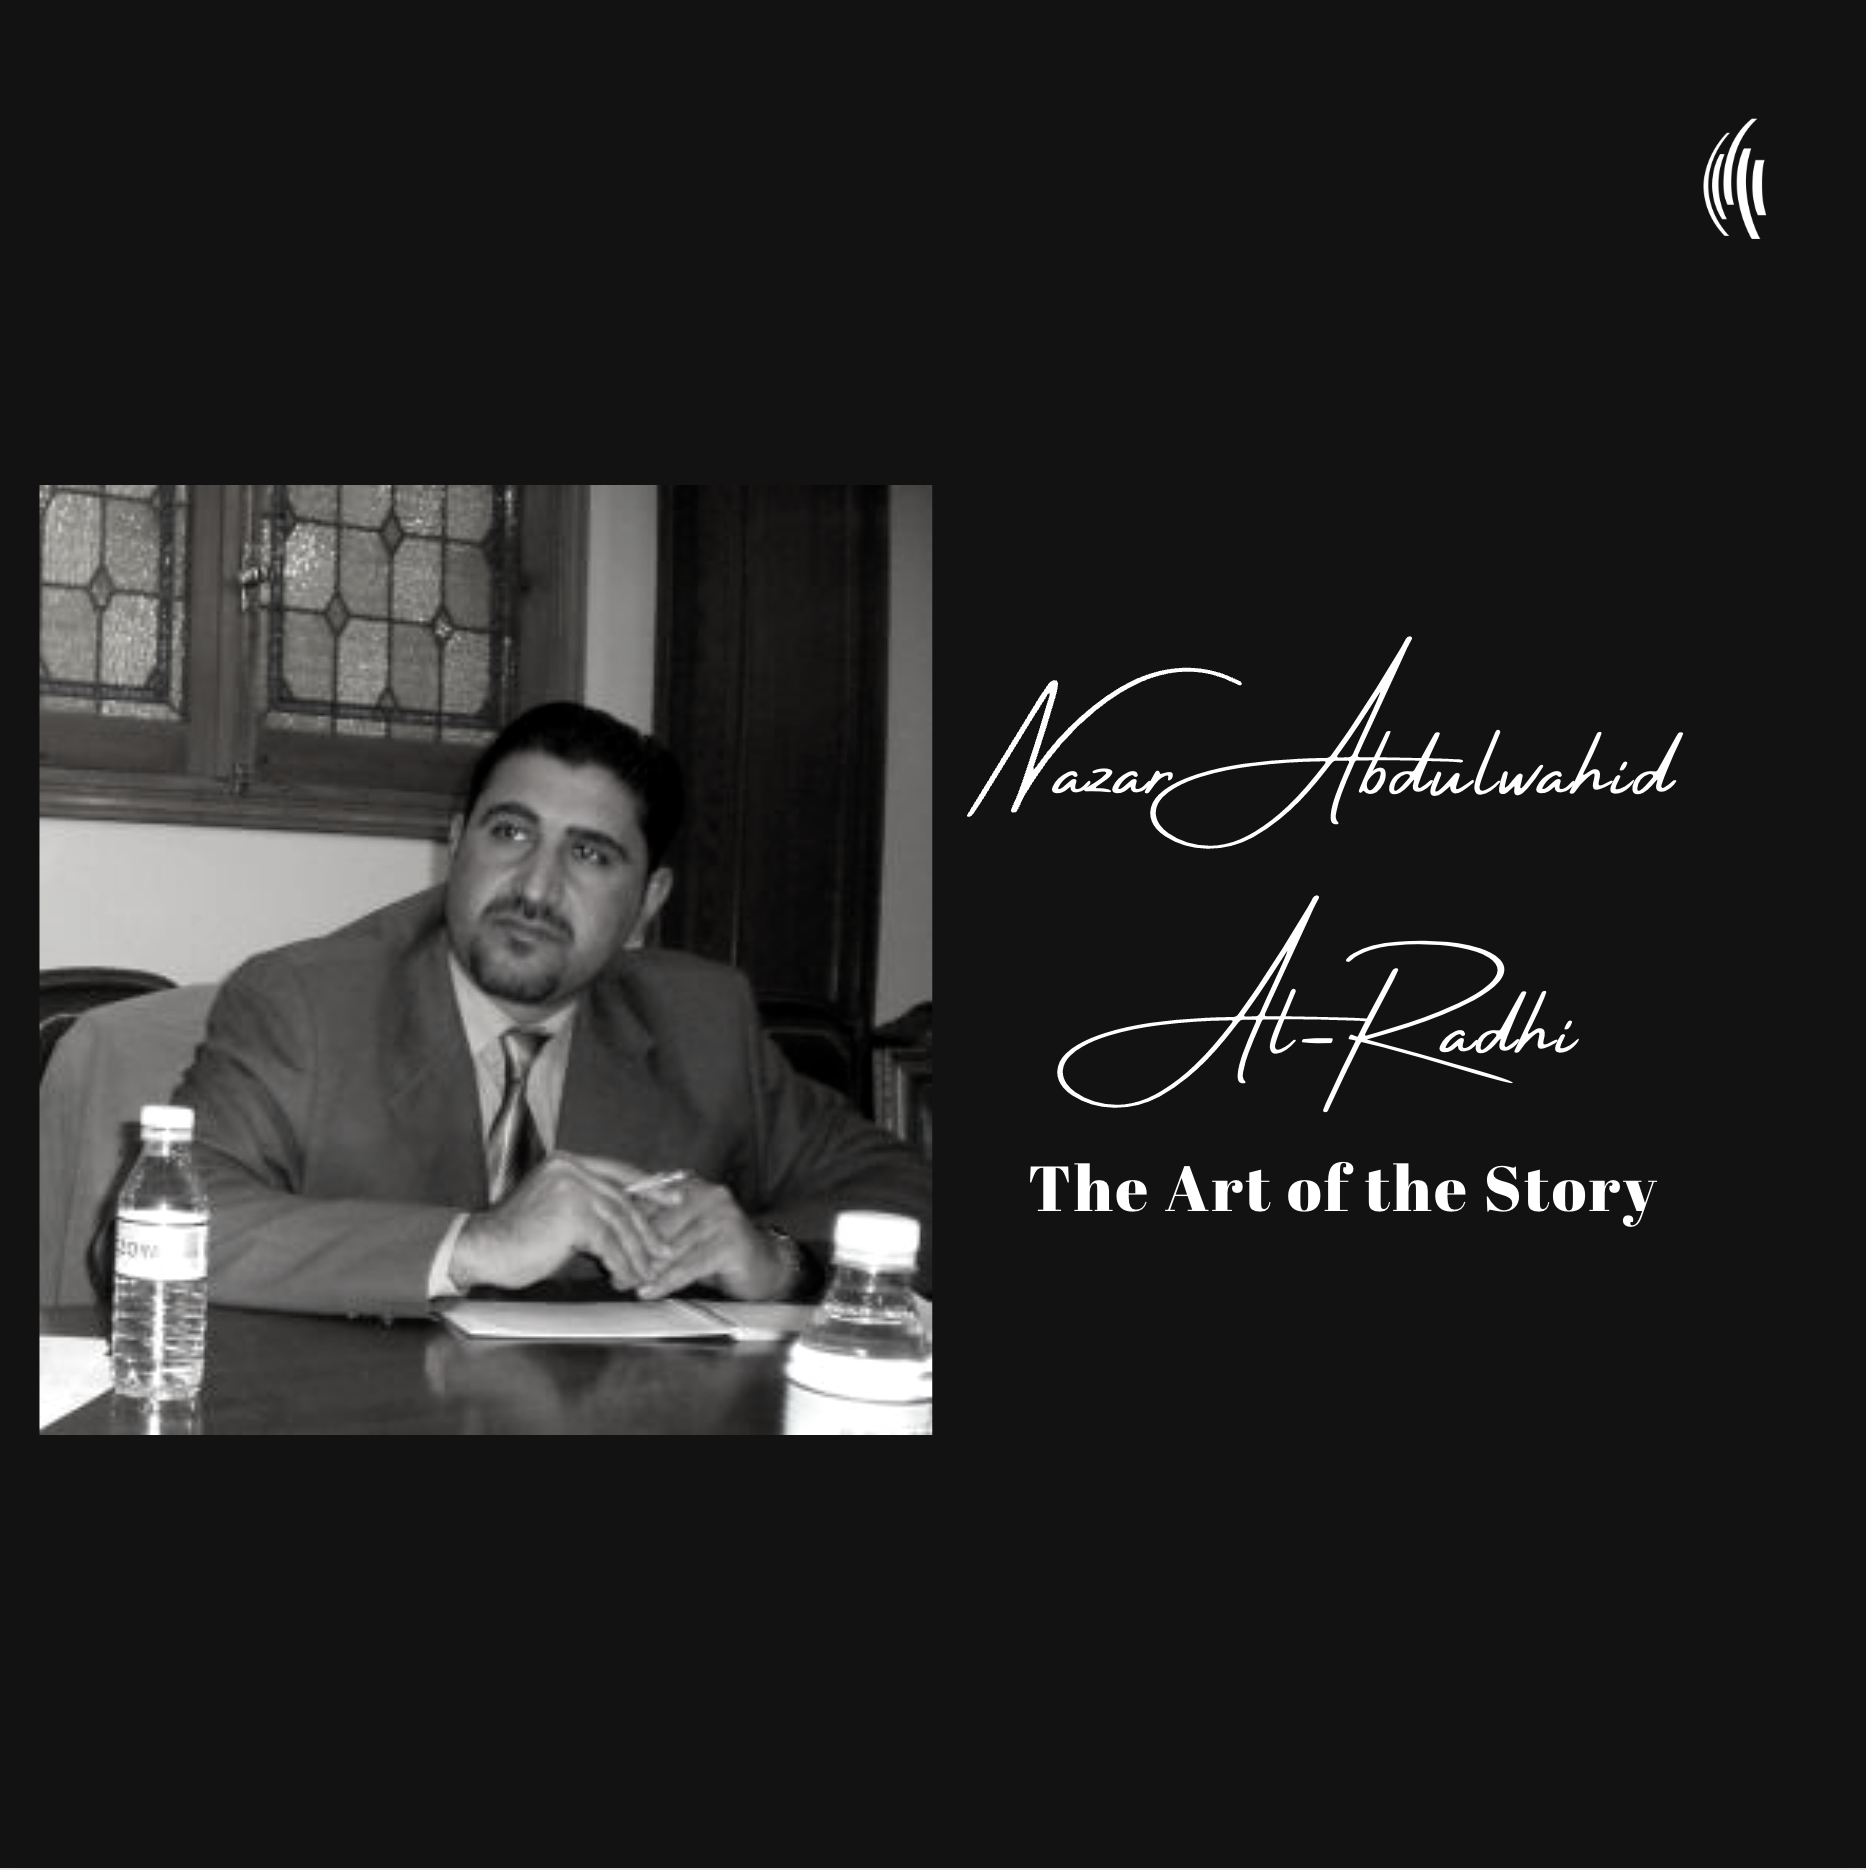 The Art of the Story: Nazar Abdulwahid Al-Radhi